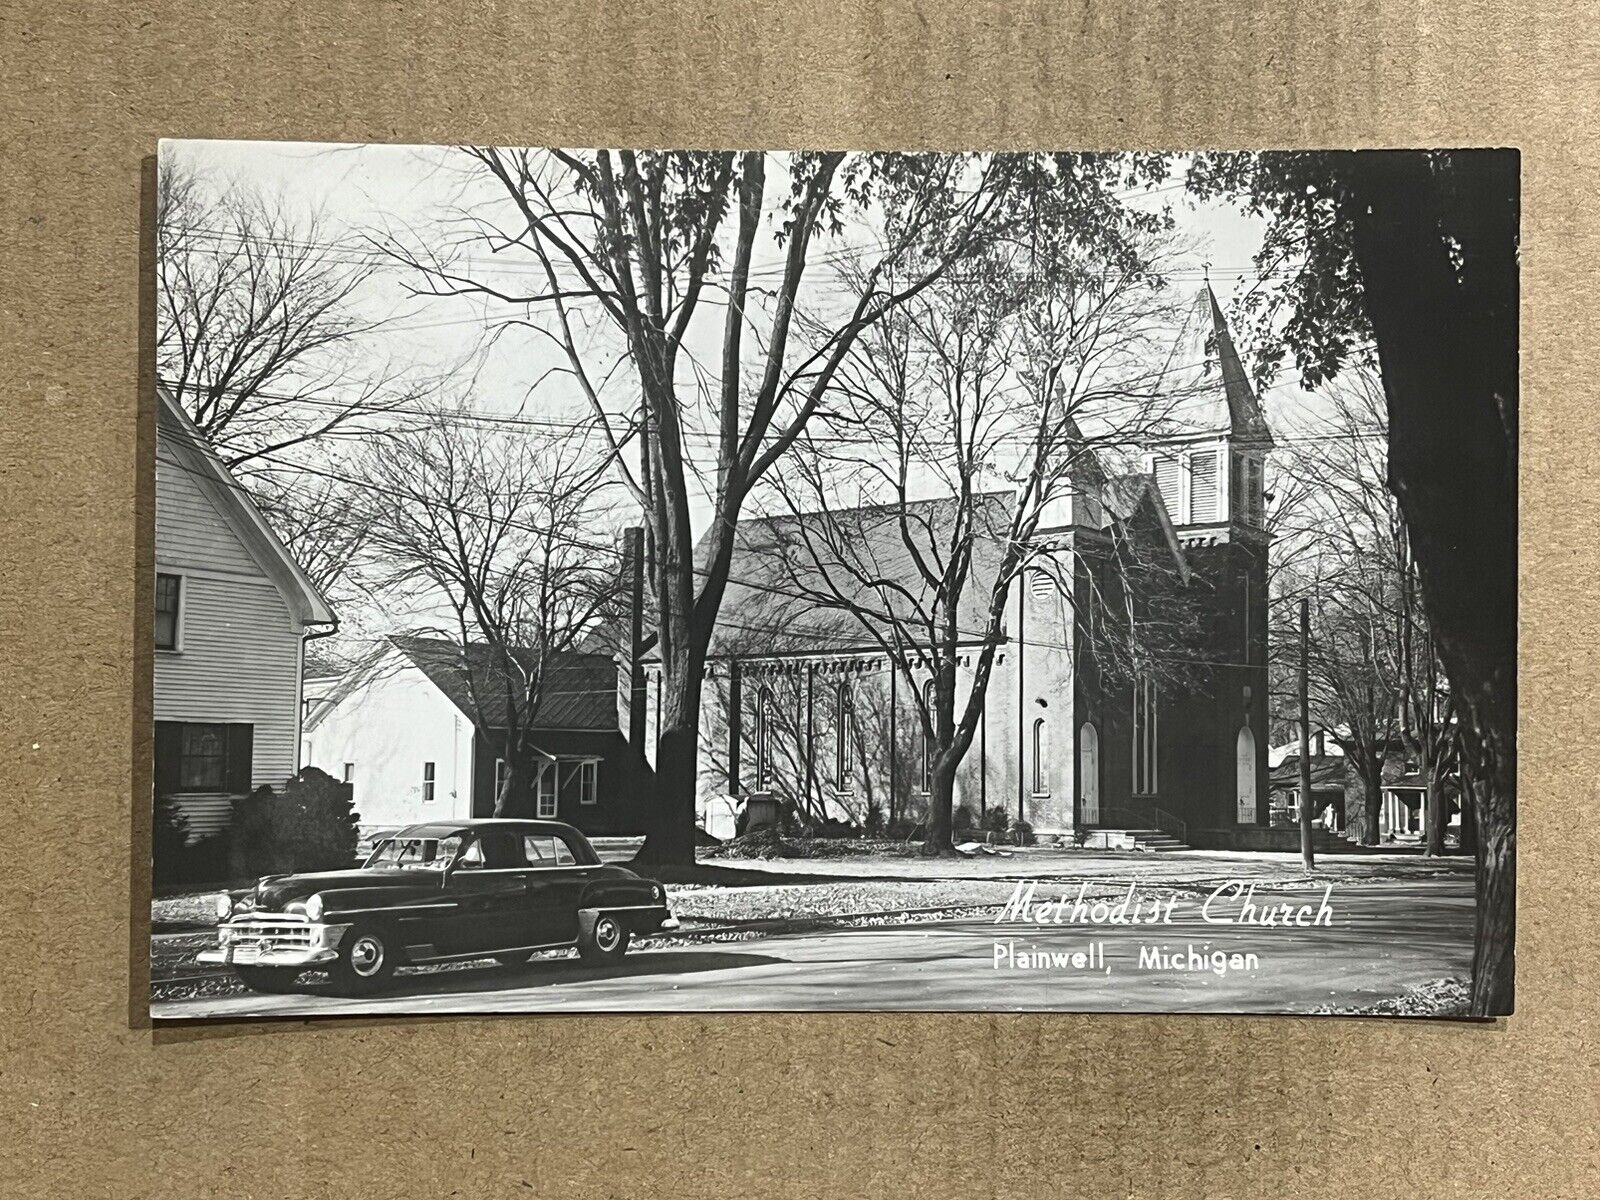 Postcard RPPC Plainwell MI Michigan Methodist Church Vintage Real Photo